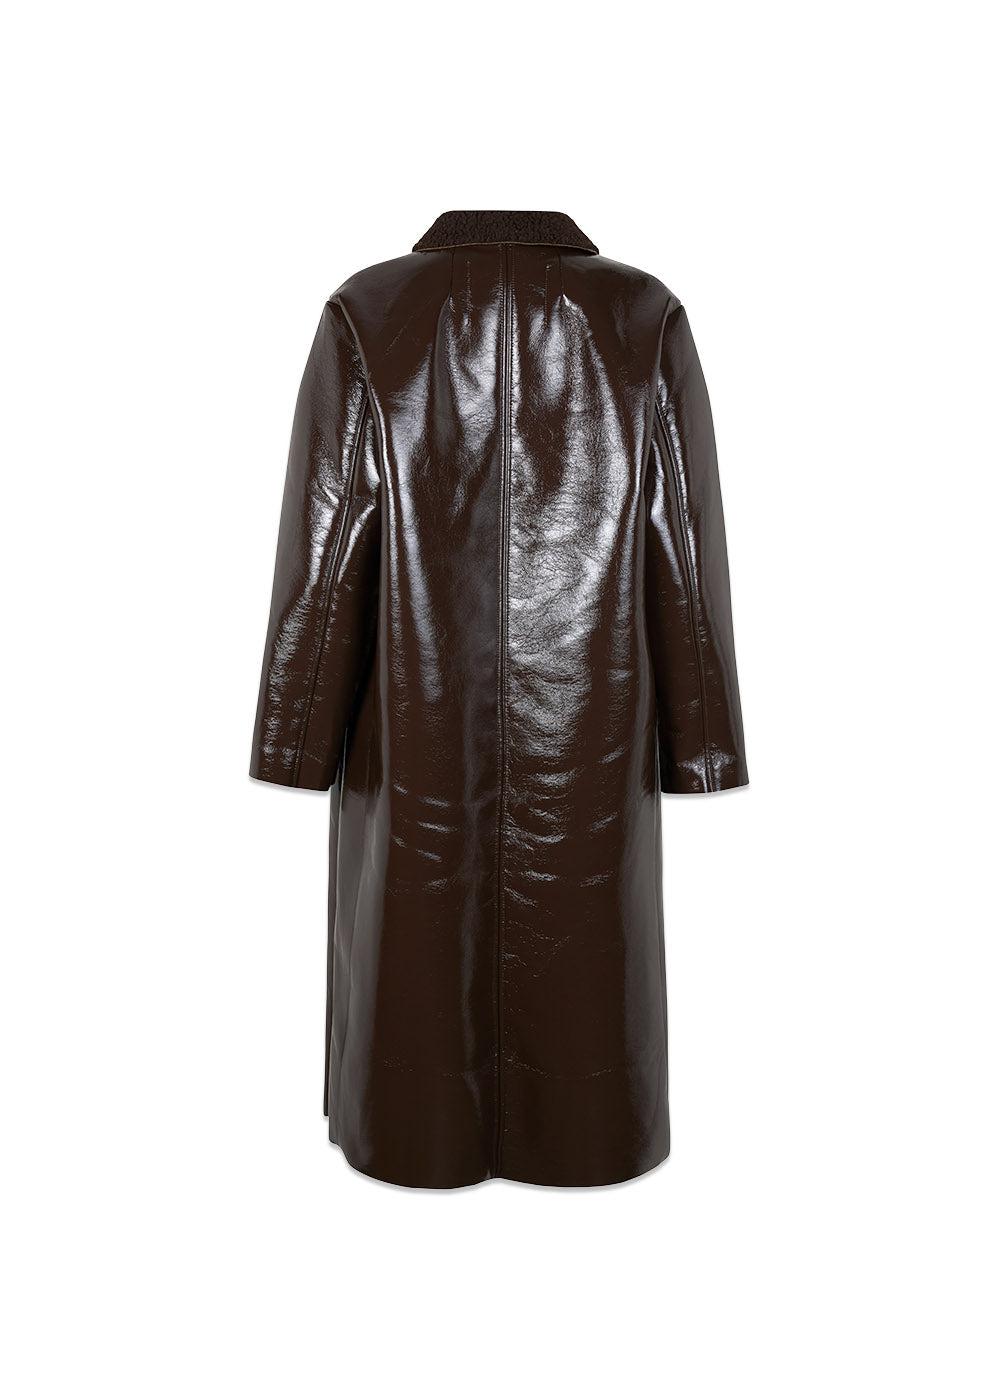 GioMD coat - Chocolate